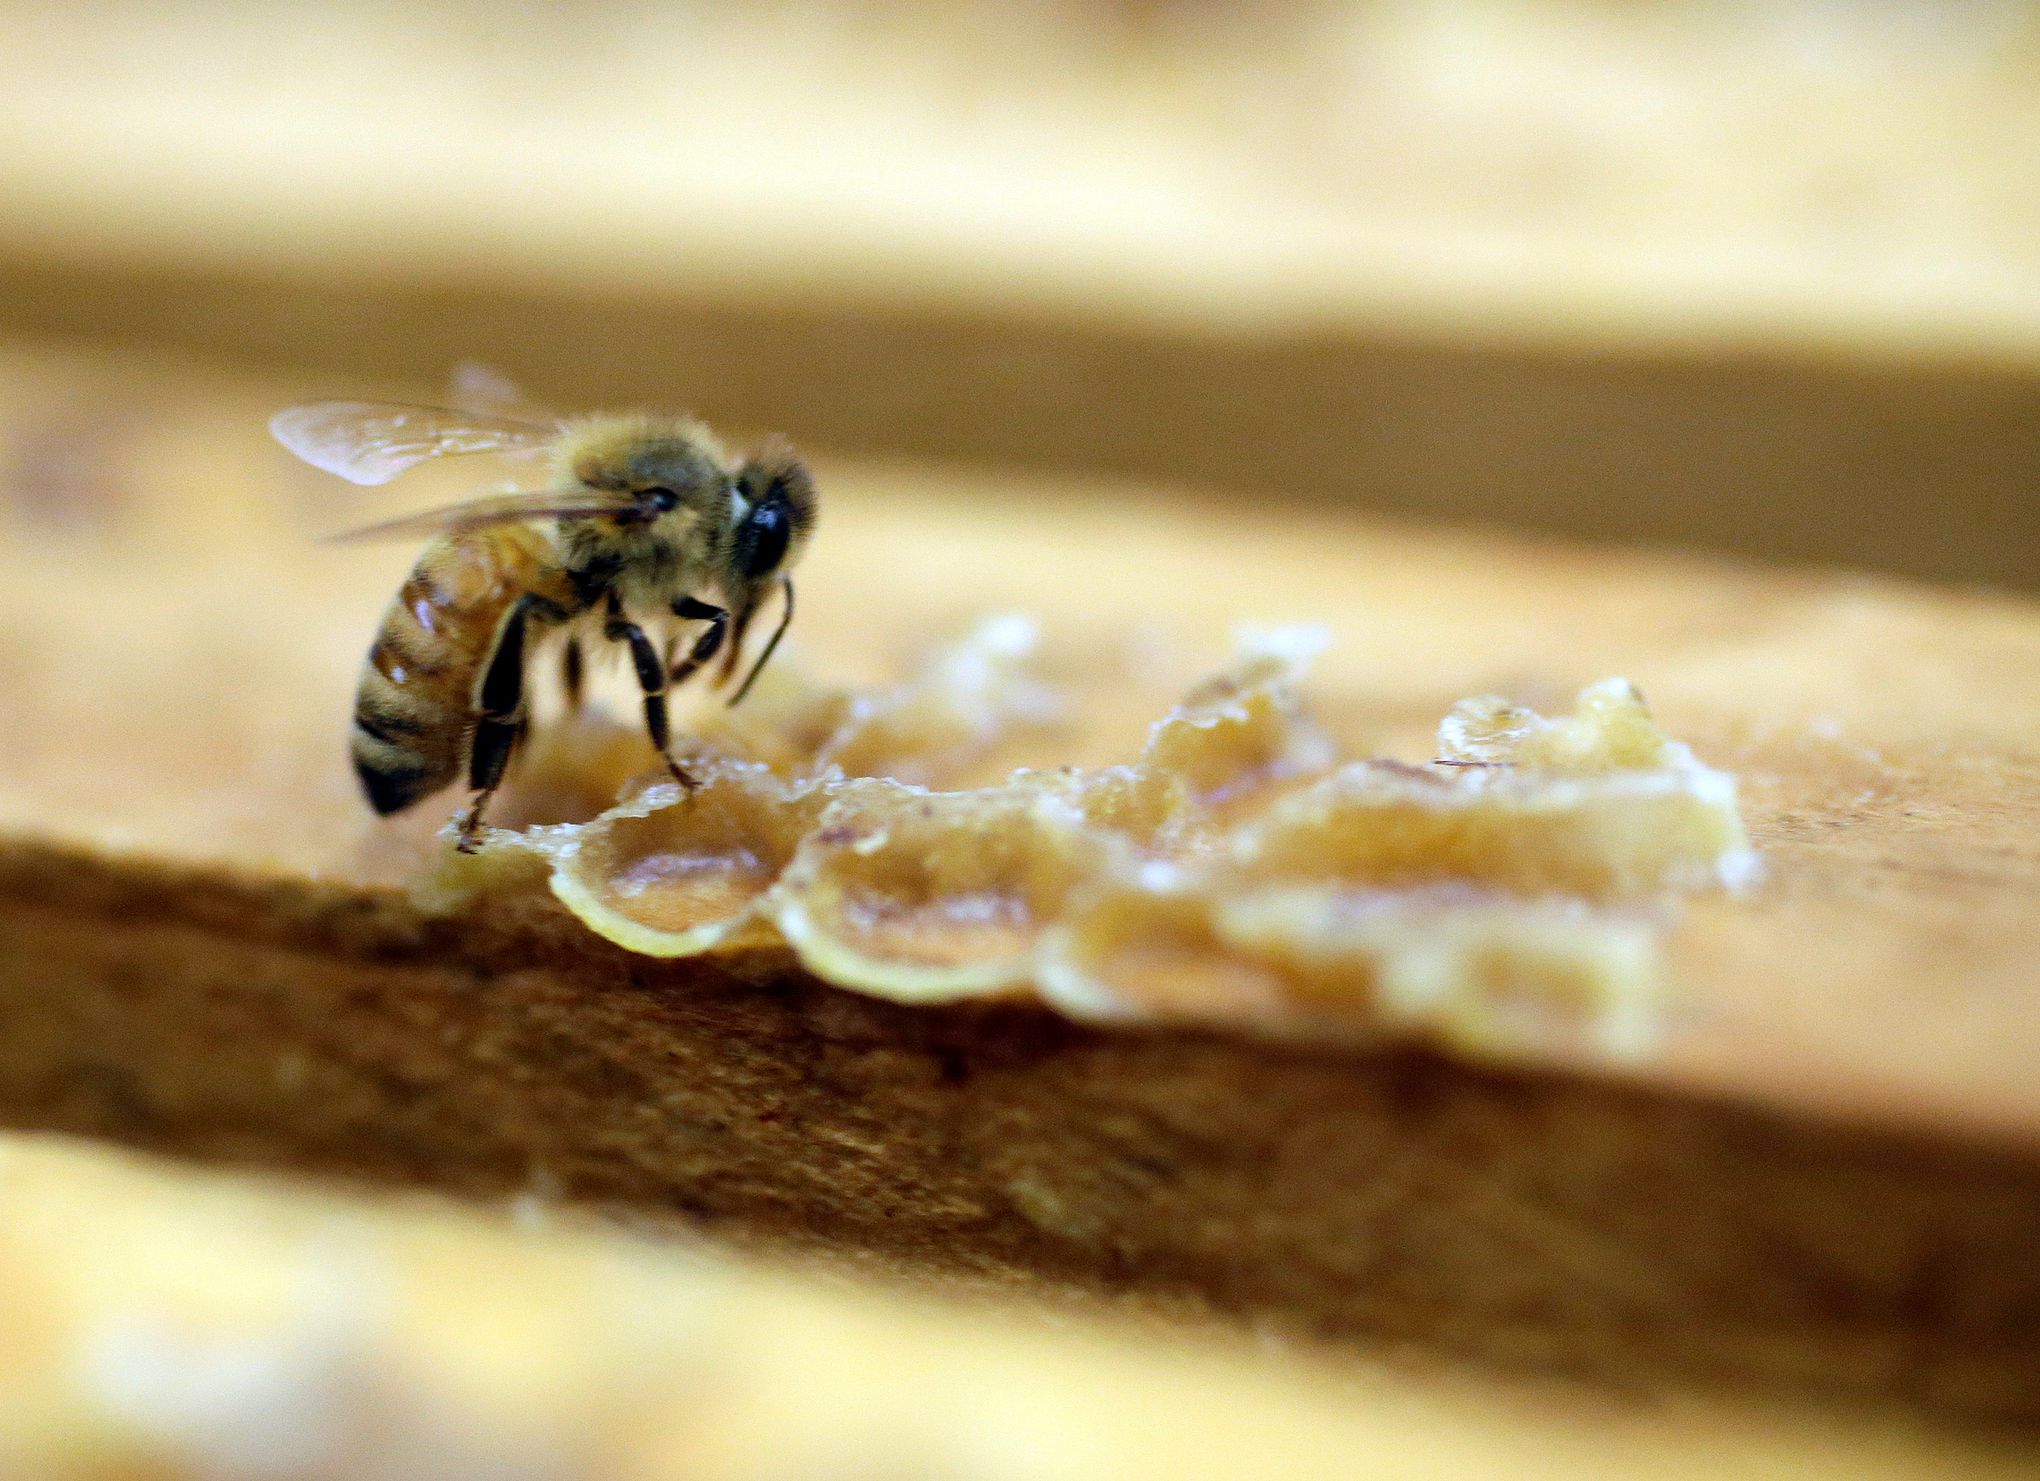 CATCH THE BUZZ-Why Vegans Avoid Honey